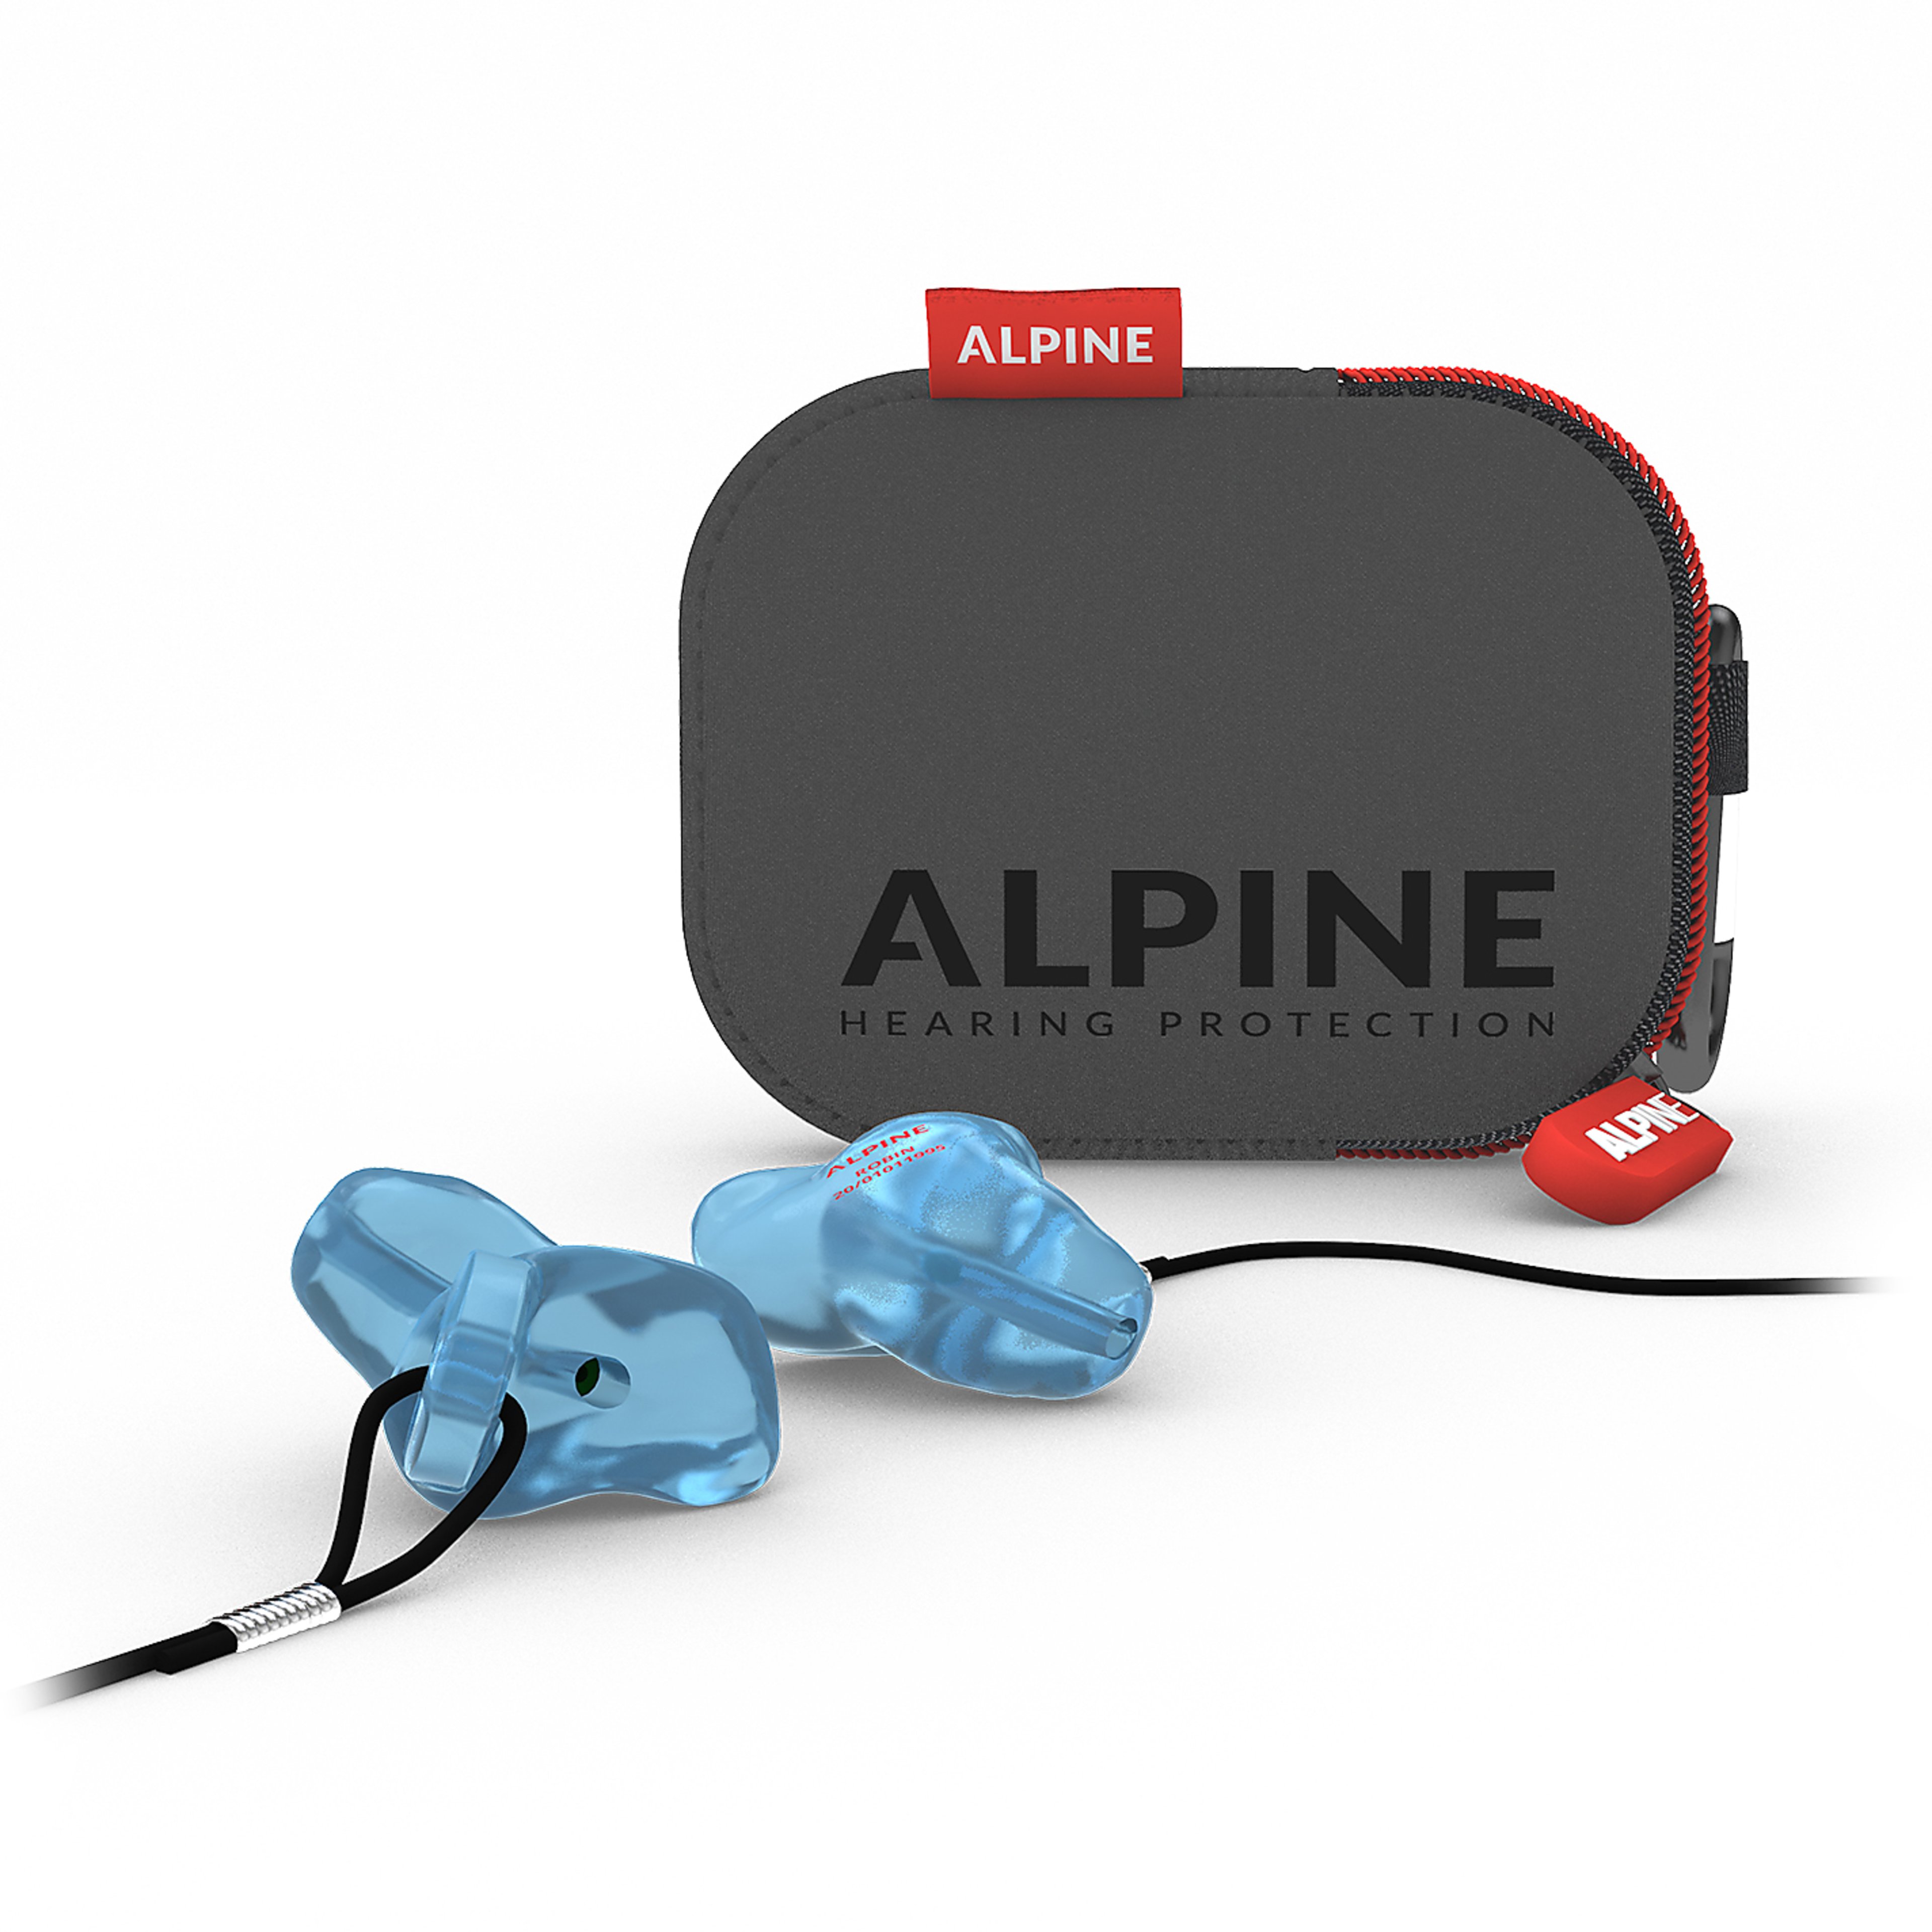 alpine_workSafe_individual_verpackung_07-2022_1x1